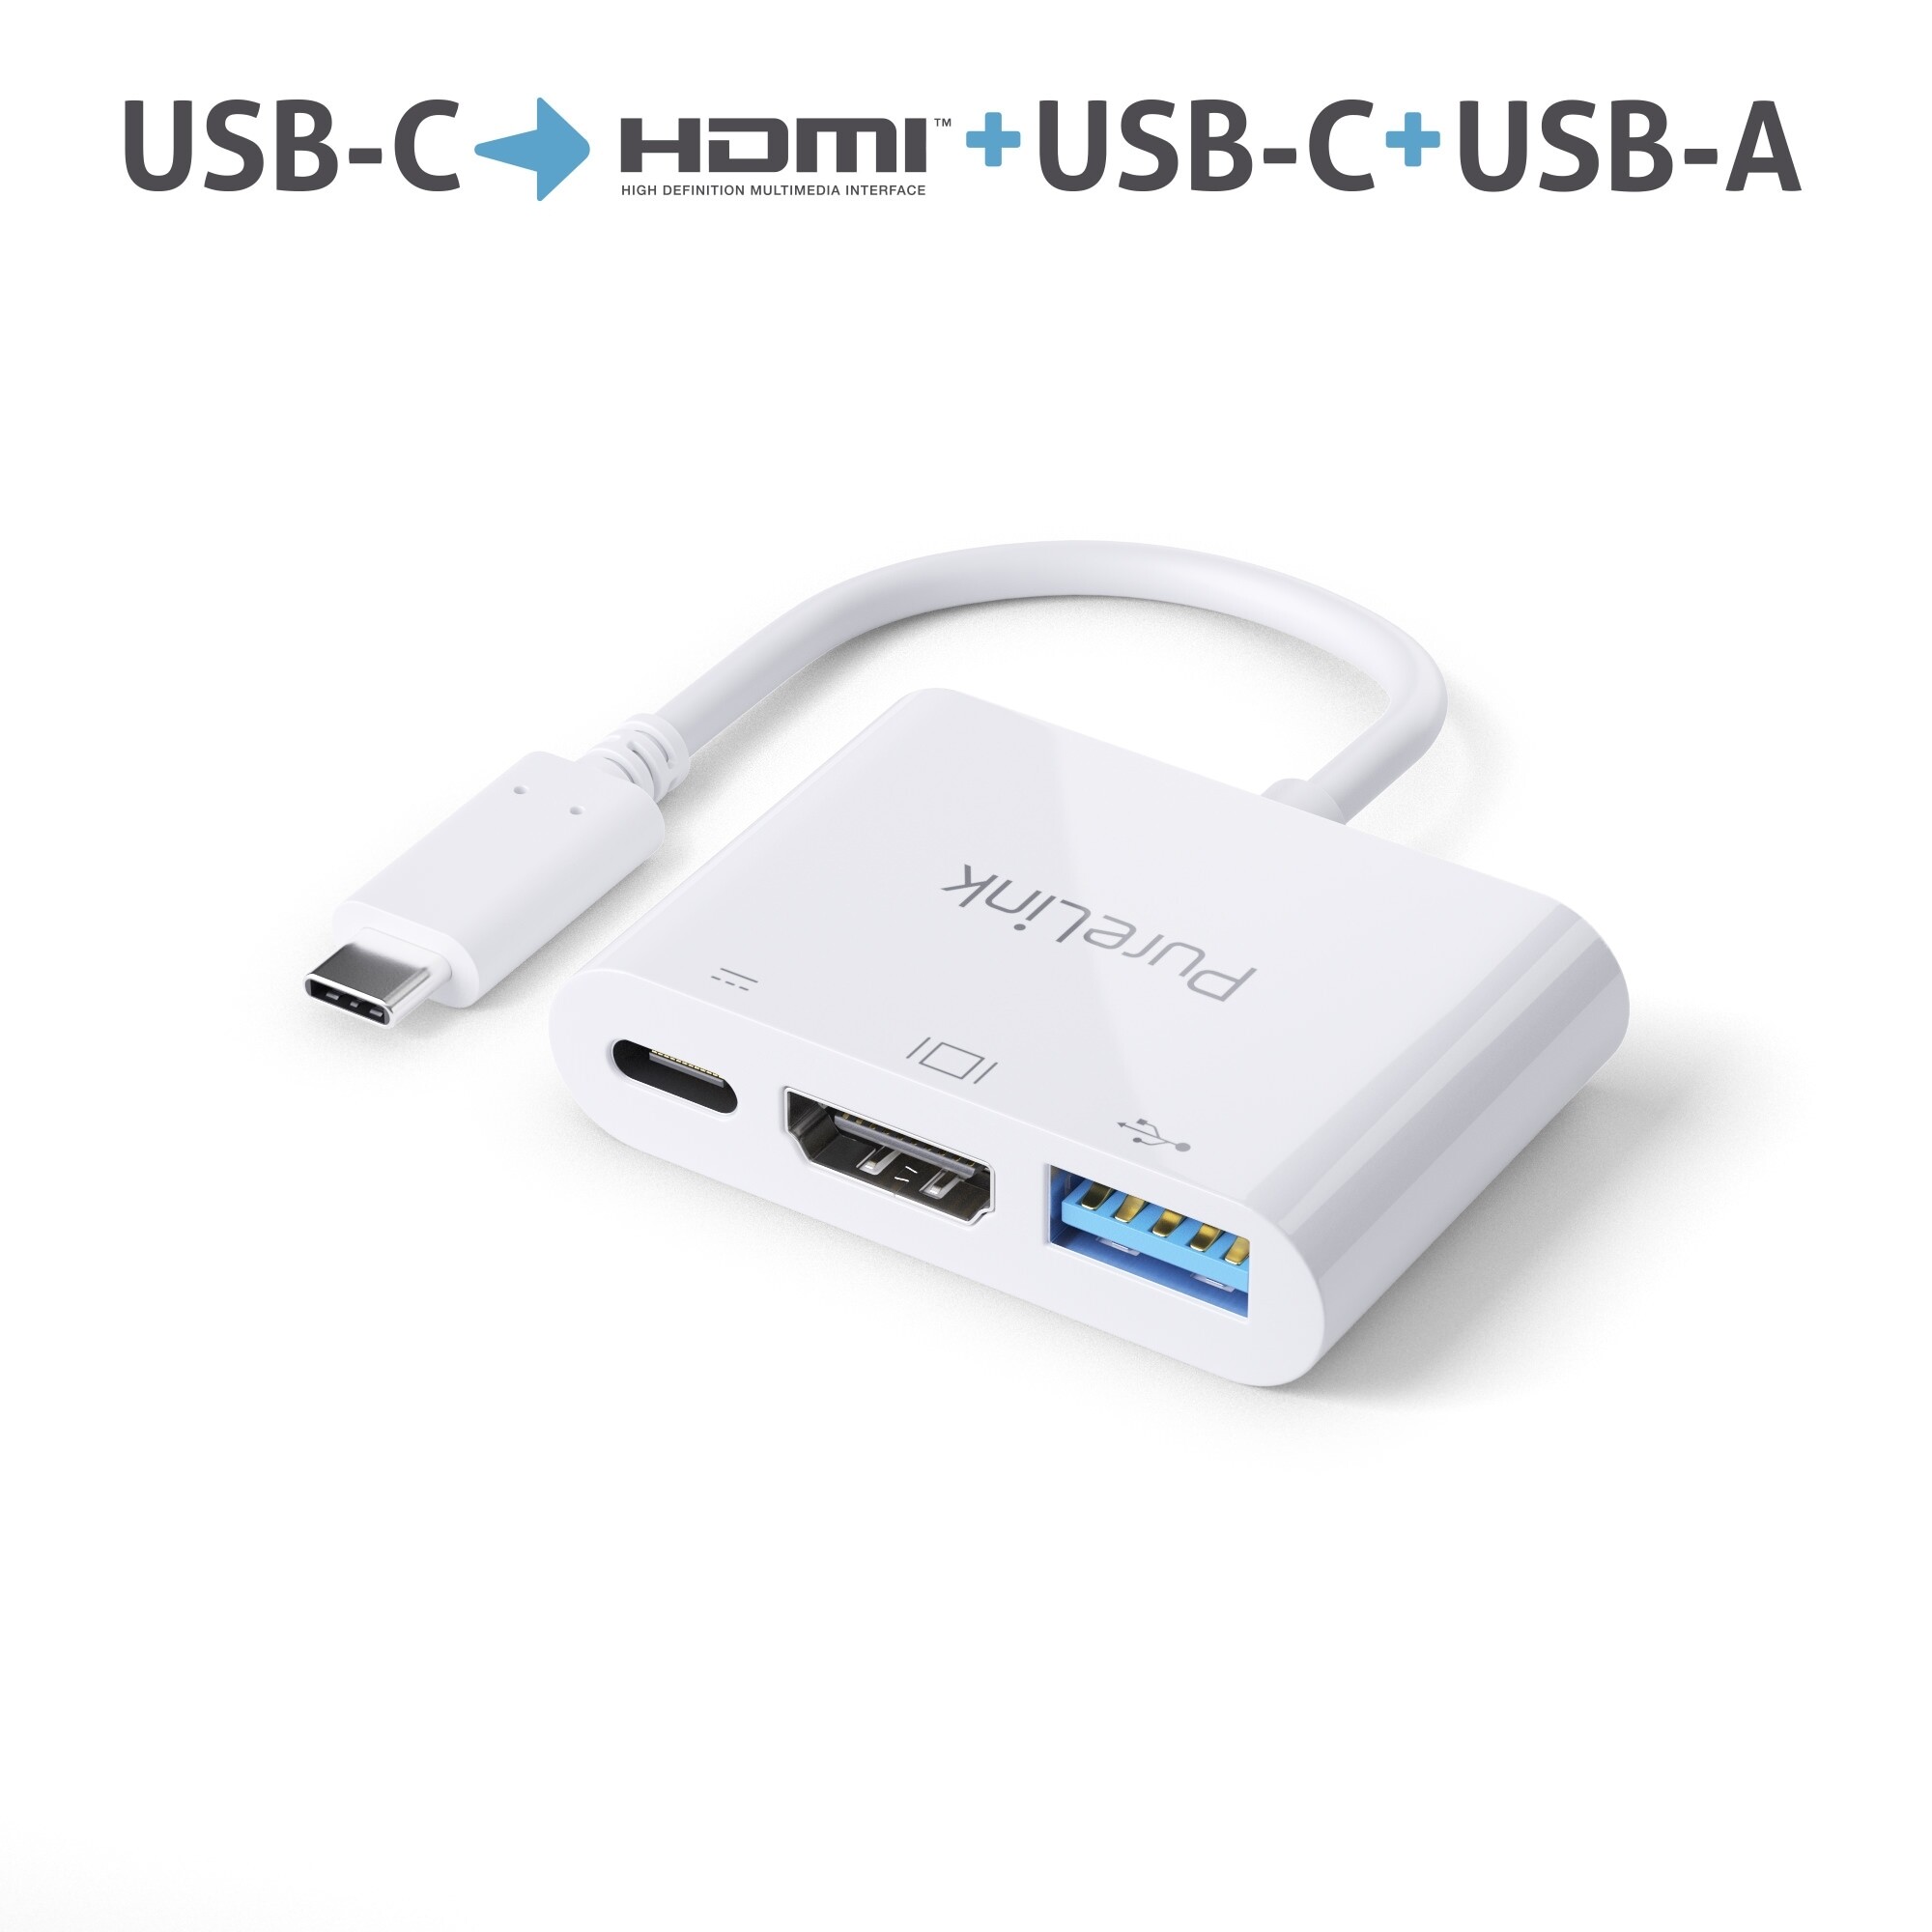 PURELINK Multiport-Adapter 0,10m IS270 USB-C auf HDMI USB-A und USB-C iSerie